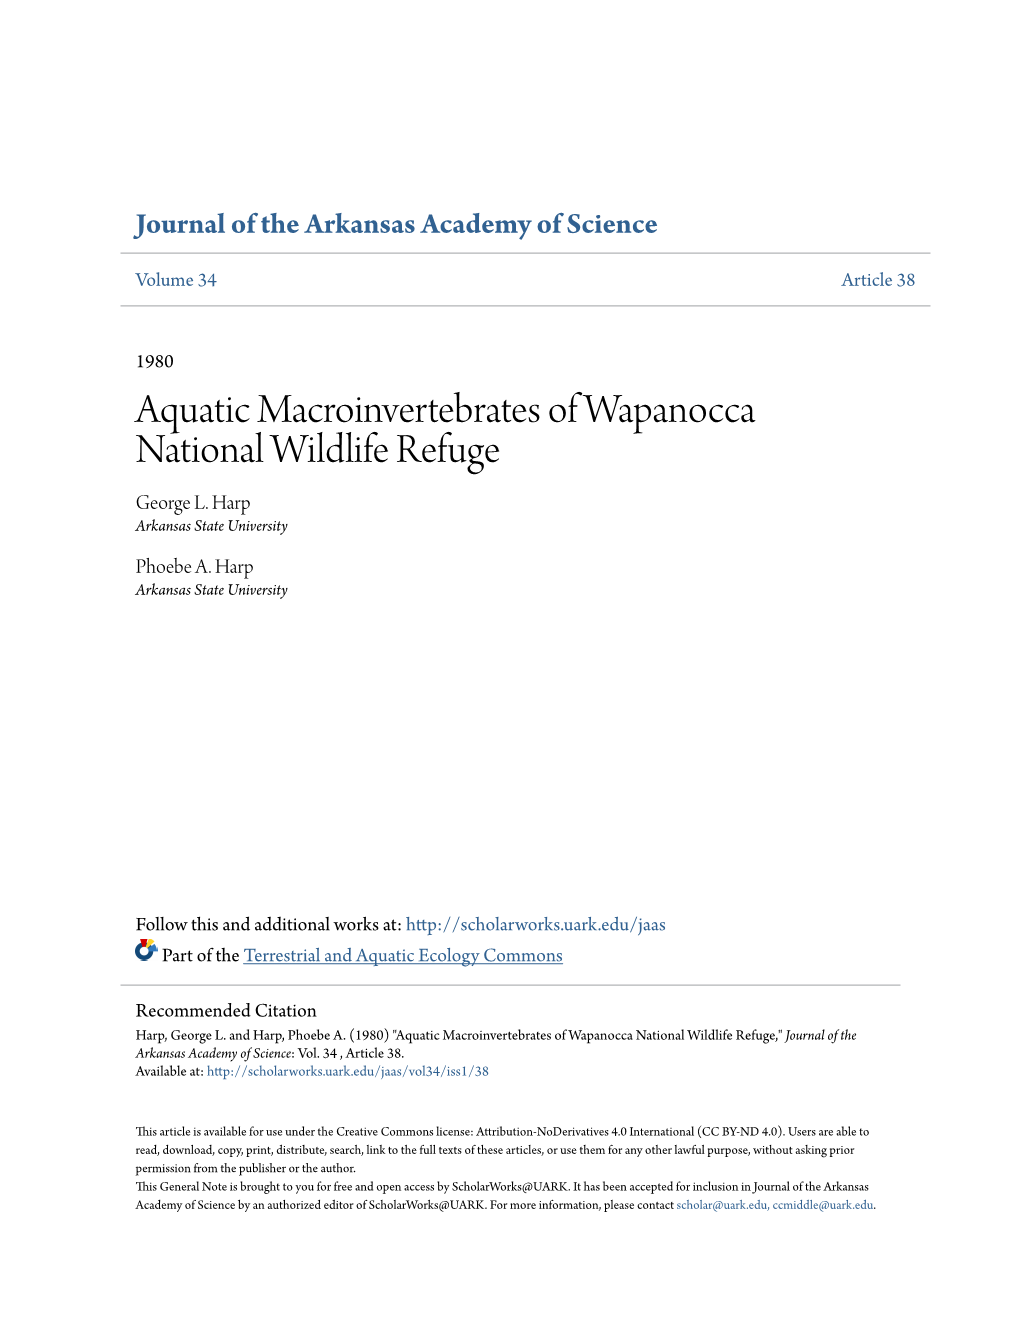 Aquatic Macroinvertebrates of Wapanocca National Wildlife Refuge George L